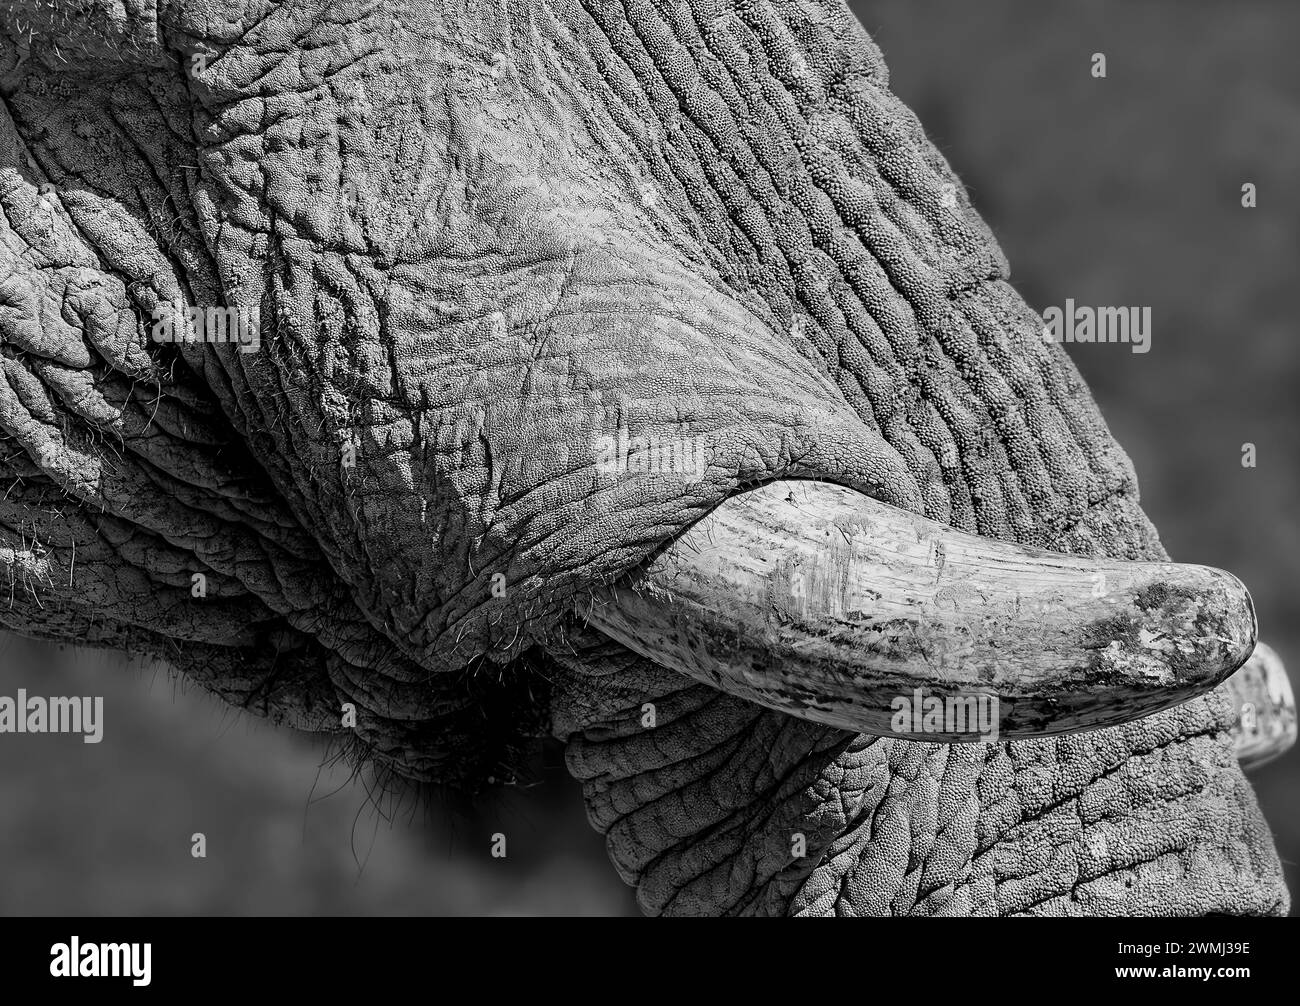 Black & white close up image of an elephant tusk & trunk Stock Photo